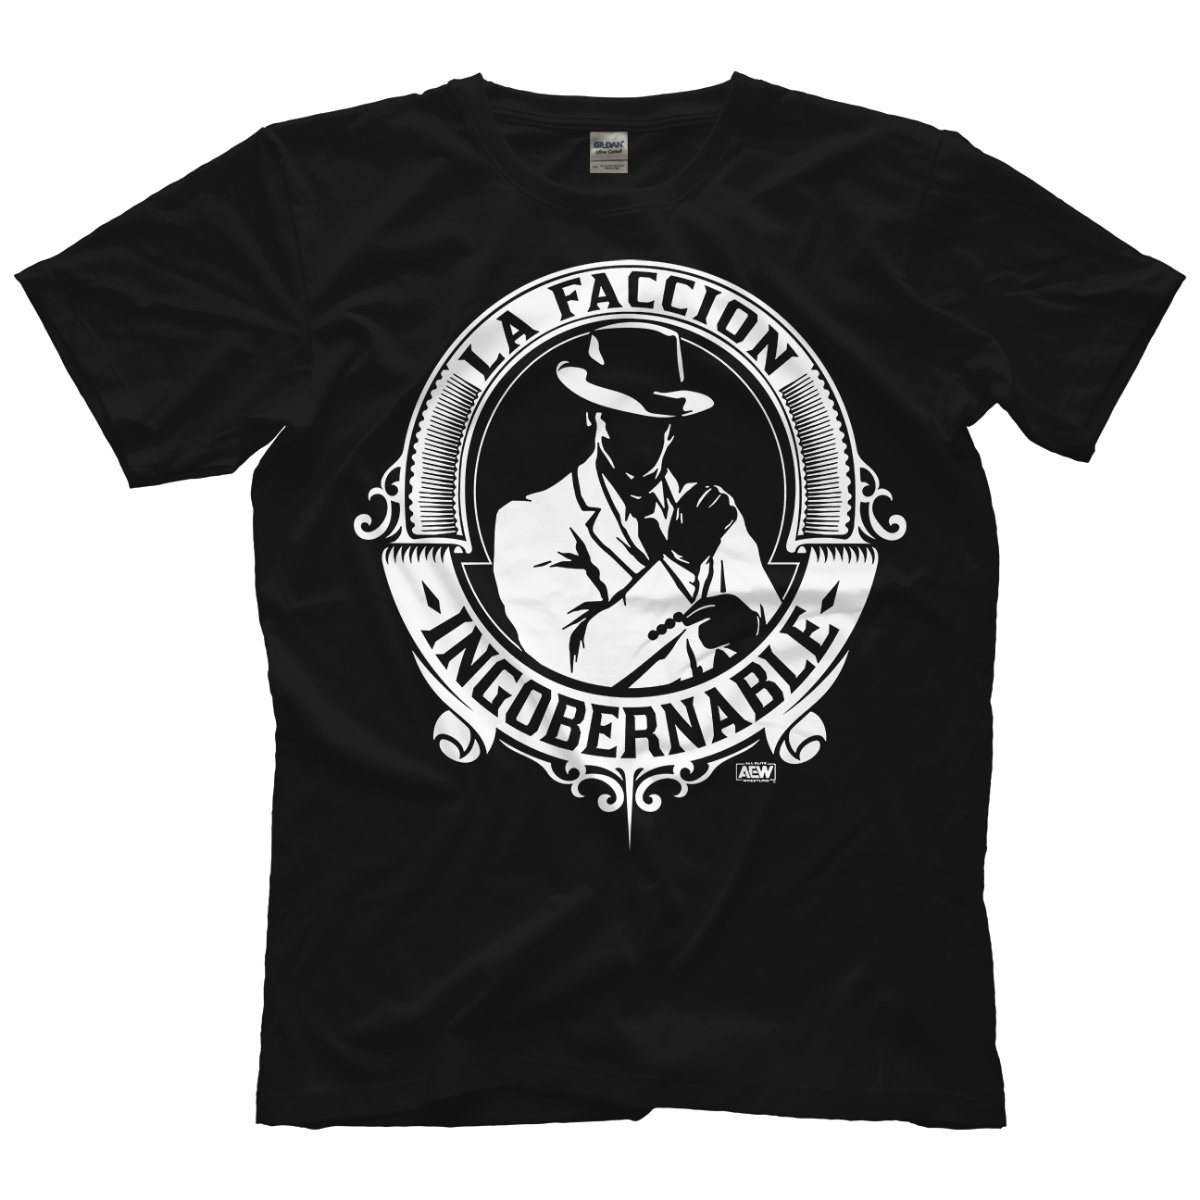 La Faccion Ingobernable shirt is up on SHOPAEW!!👊🏼 #AEWRampage #AEWonTNT